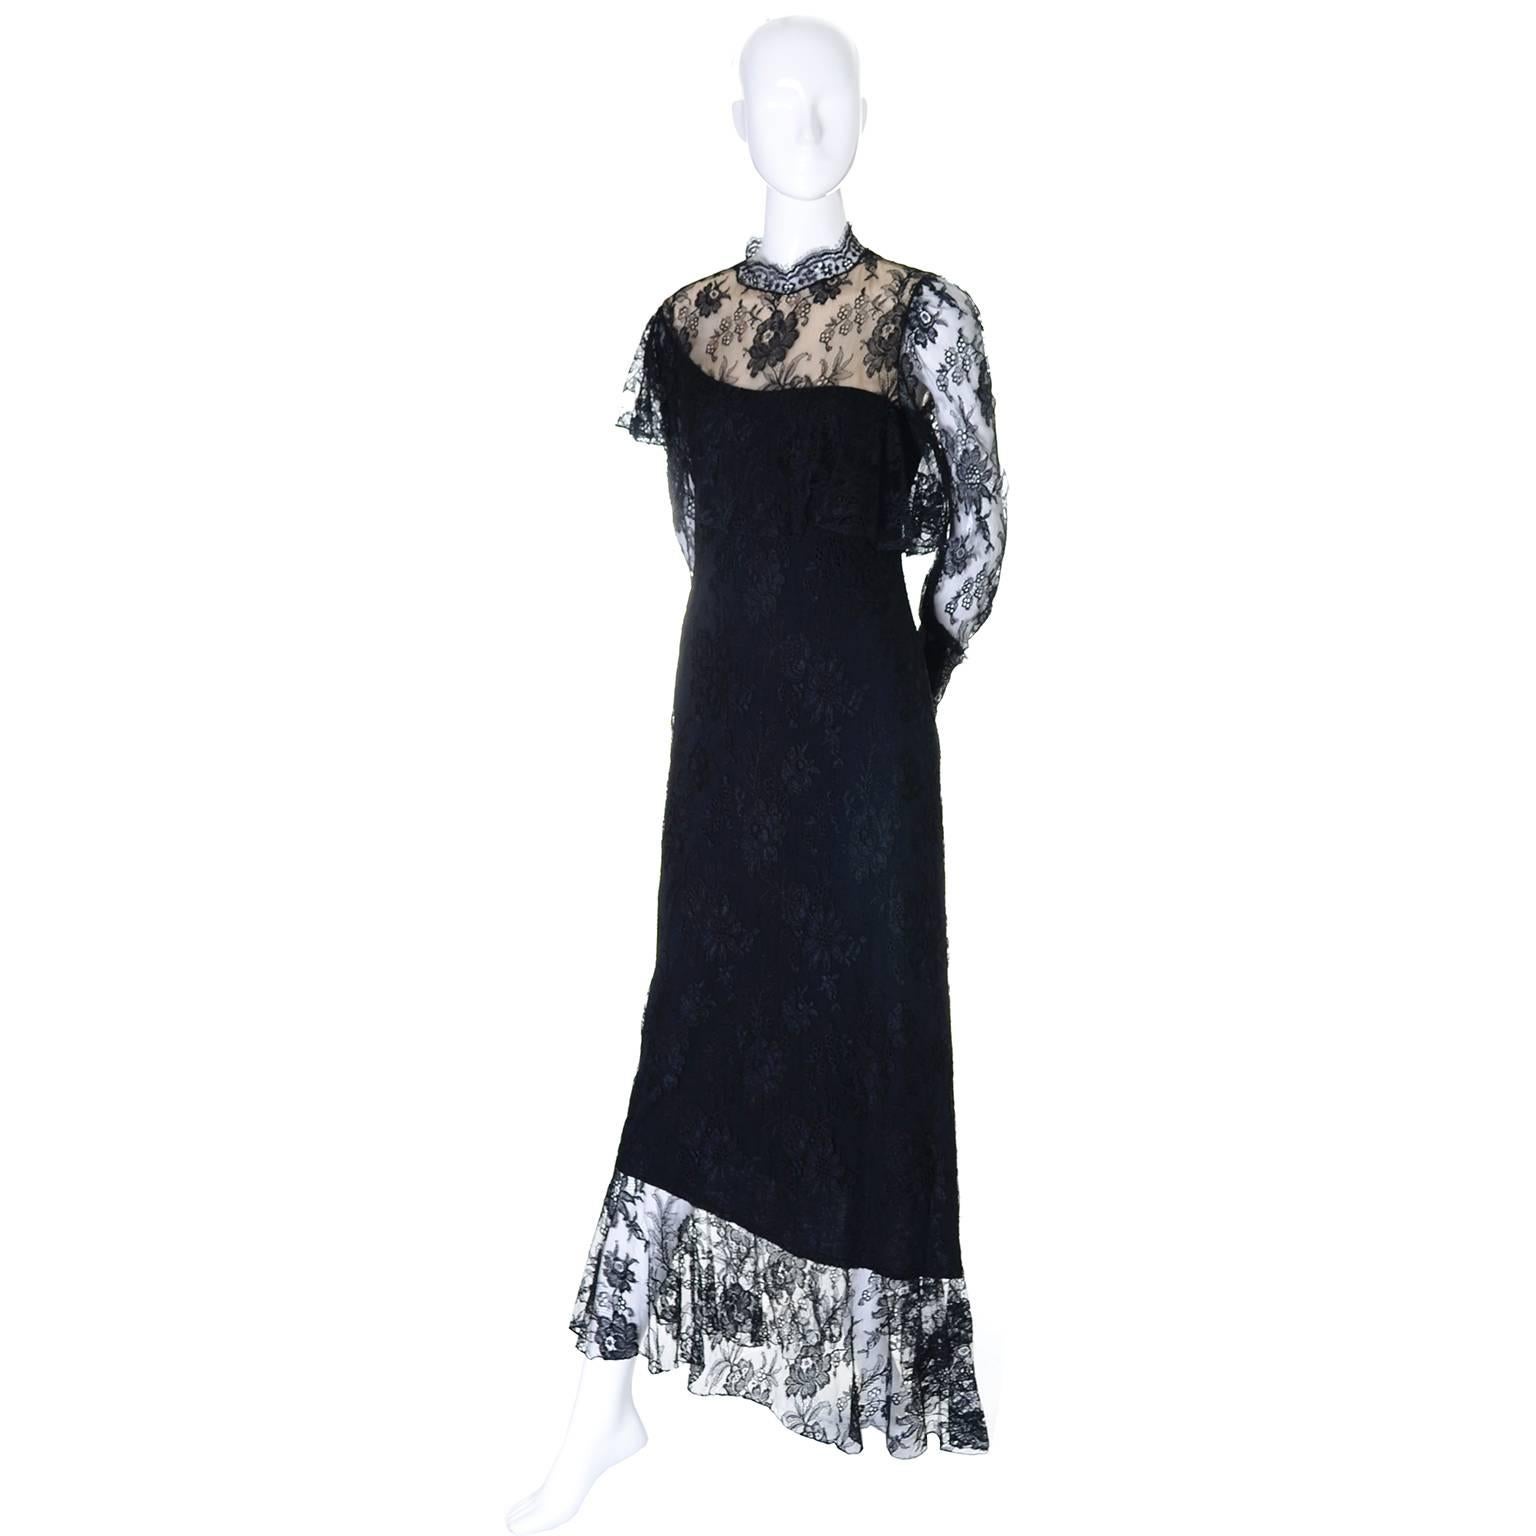 Loris Azzaro Vintage Dress Black Lace Victorian Style 1980s Evening Gown France 2